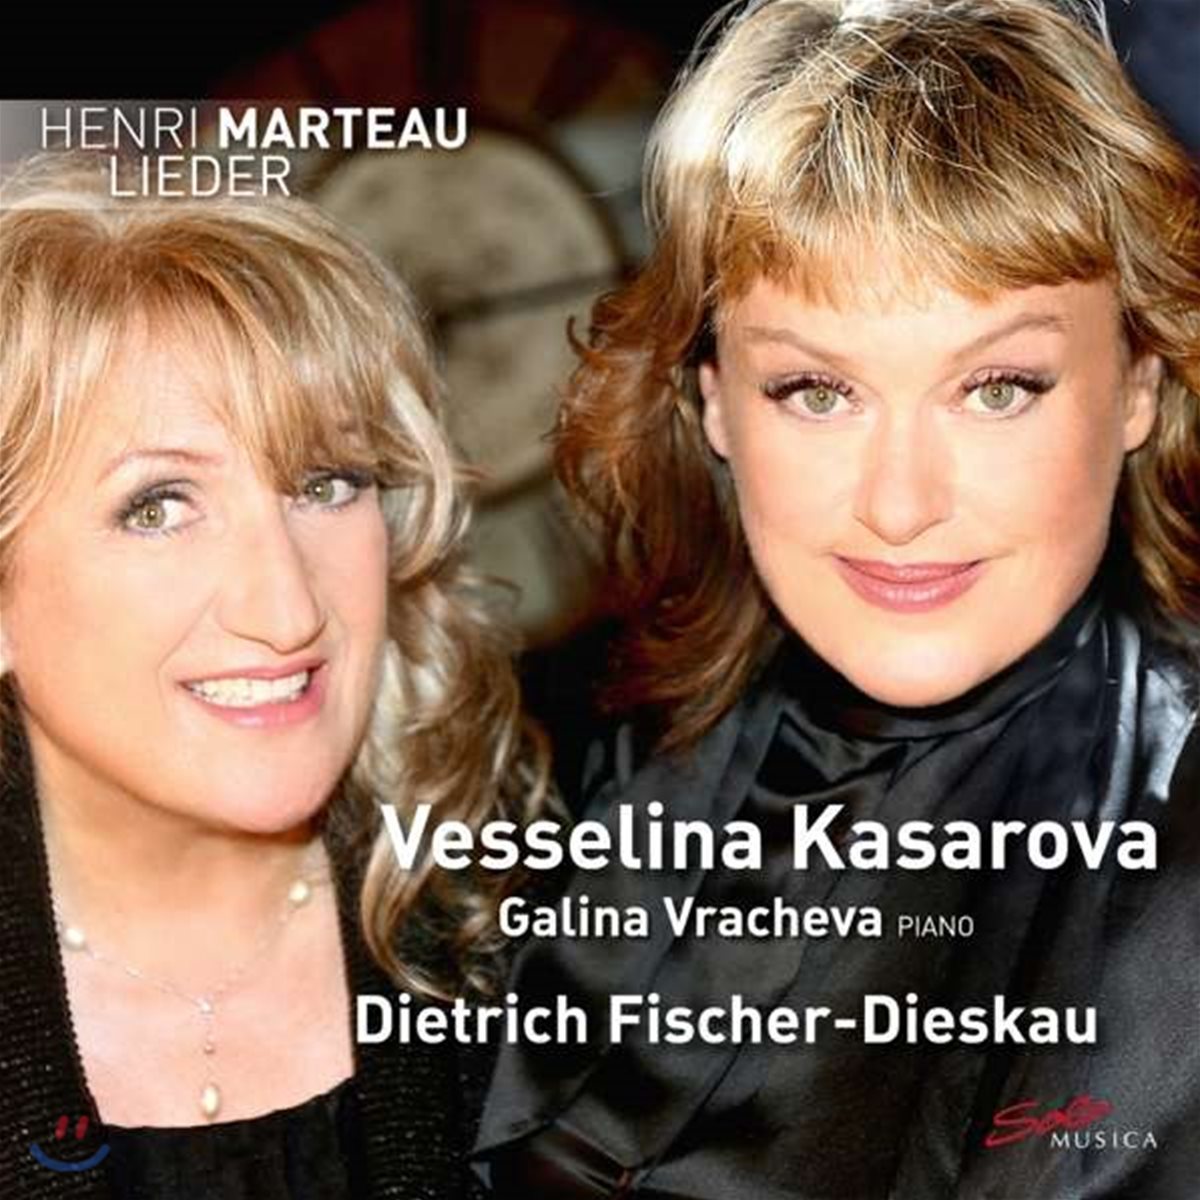 Vesselina Kasarova 앙리 마르토: 갈대의 노래, 열 개의 노래, 여덟 개의 노래 (Henri Marteau: Lieder)